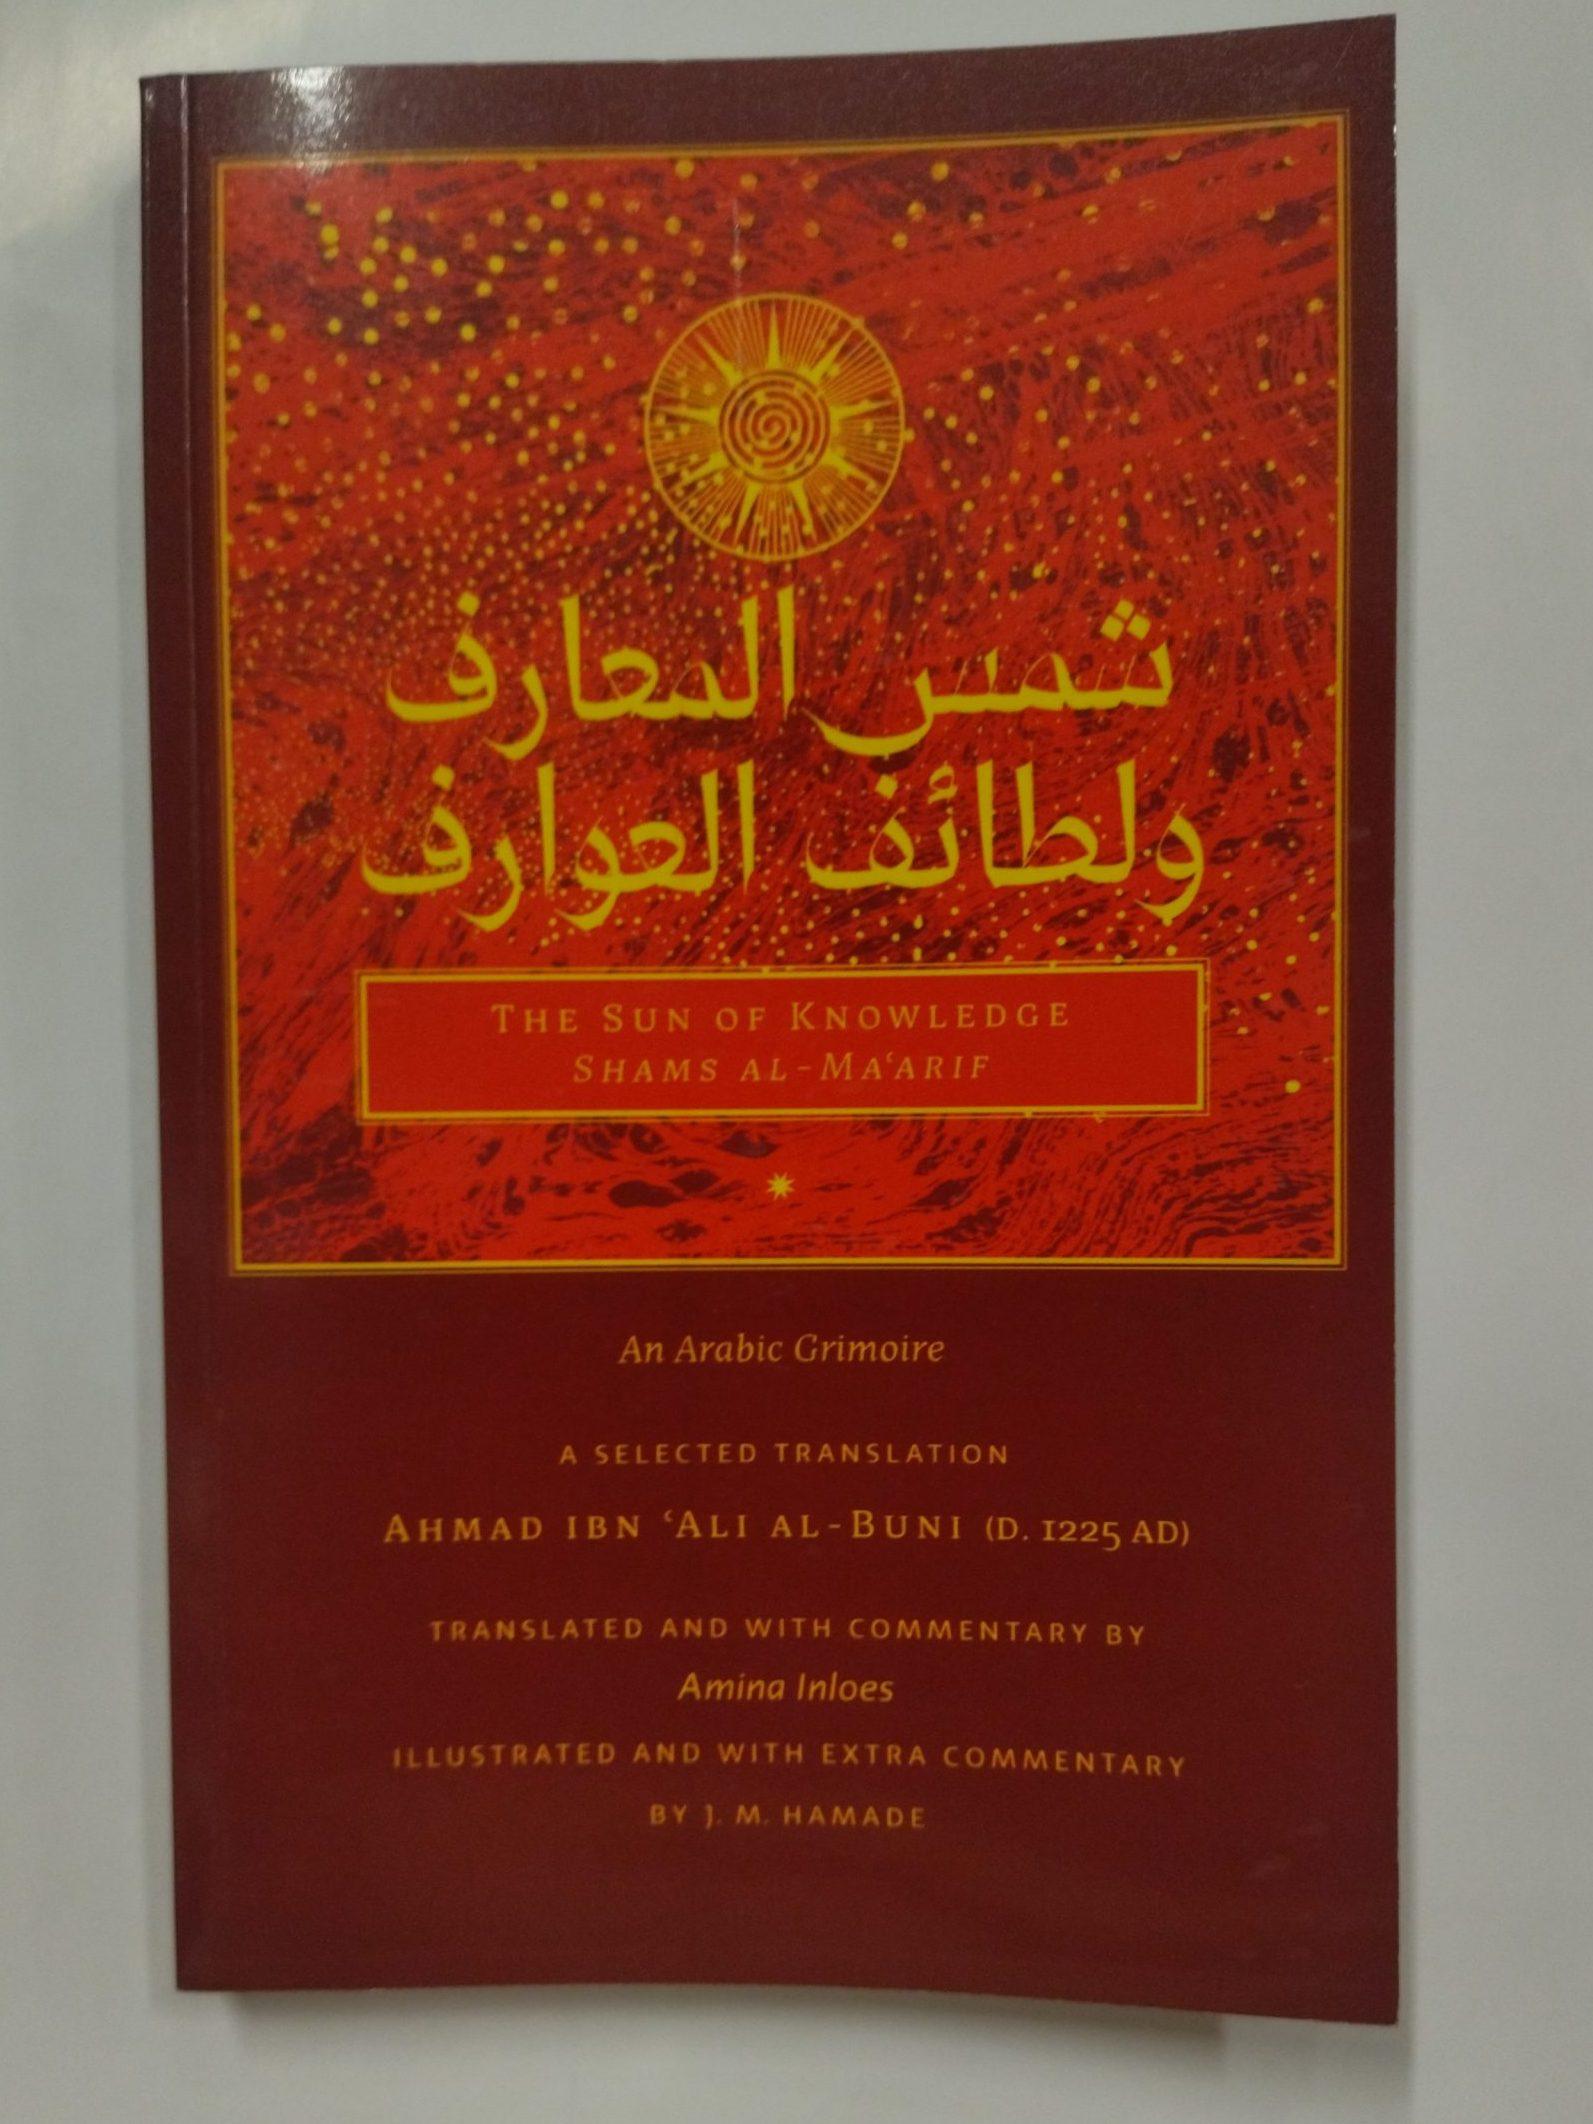 The Sun of Knowledge (Shams al-Ma'arif): An Arabic Grimoire in Selected Translation by Ahmad ibn 'Ali al-Buni (Author), J. M. Hamade (Illustrator), Amina Inloes (Translator)